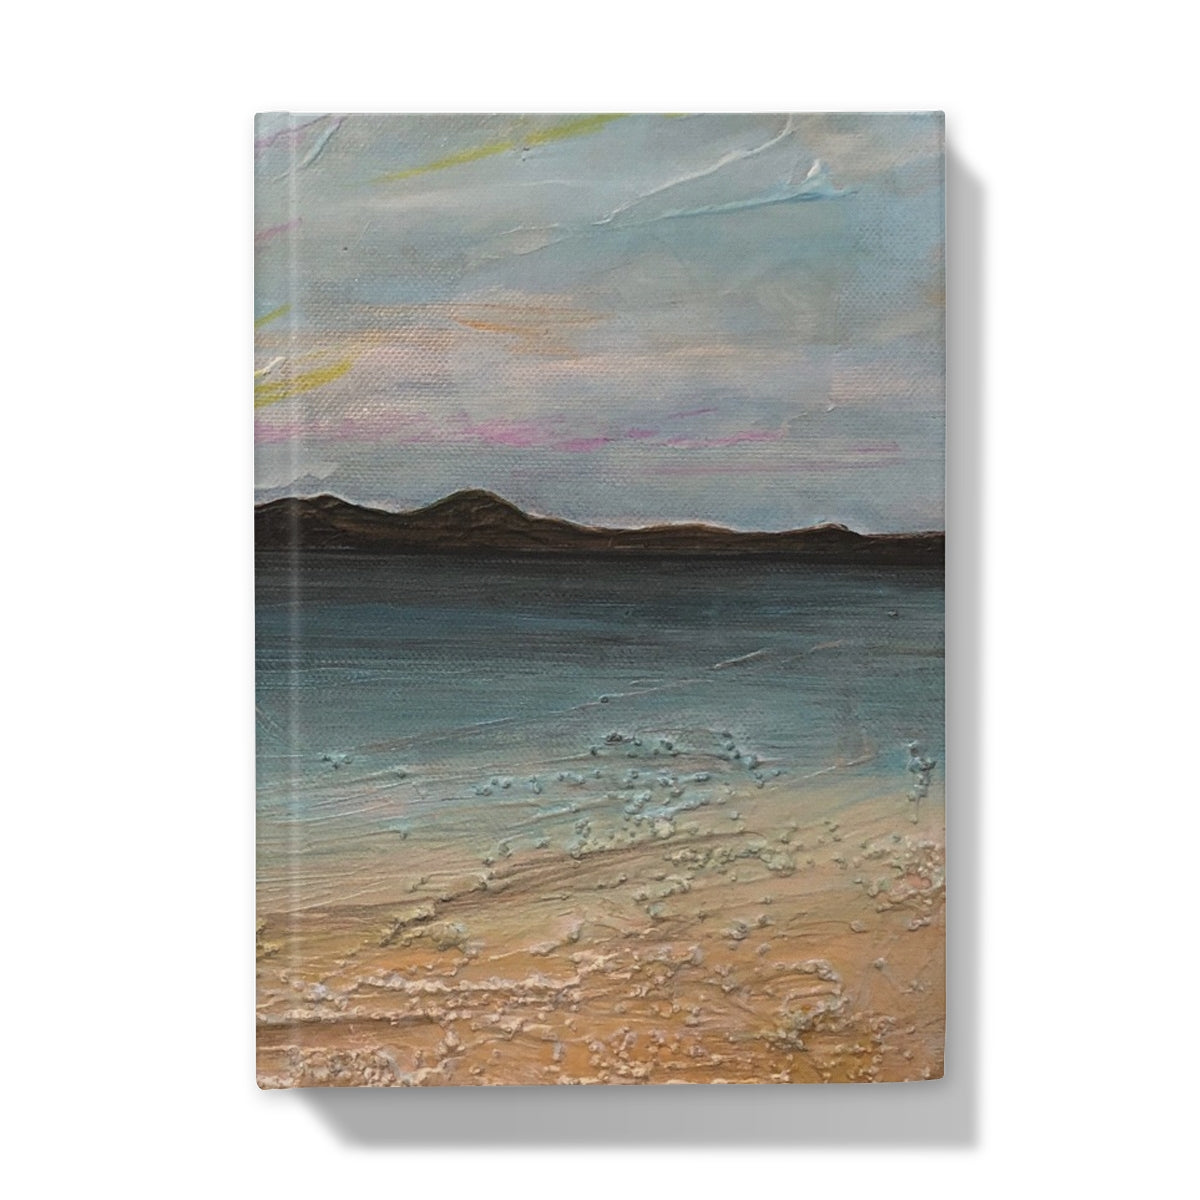 Garrynamonie Beach South Uist Art Gifts Hardback Journal-Journals & Notebooks-Hebridean Islands Art Gallery-A5-Lined-Paintings, Prints, Homeware, Art Gifts From Scotland By Scottish Artist Kevin Hunter